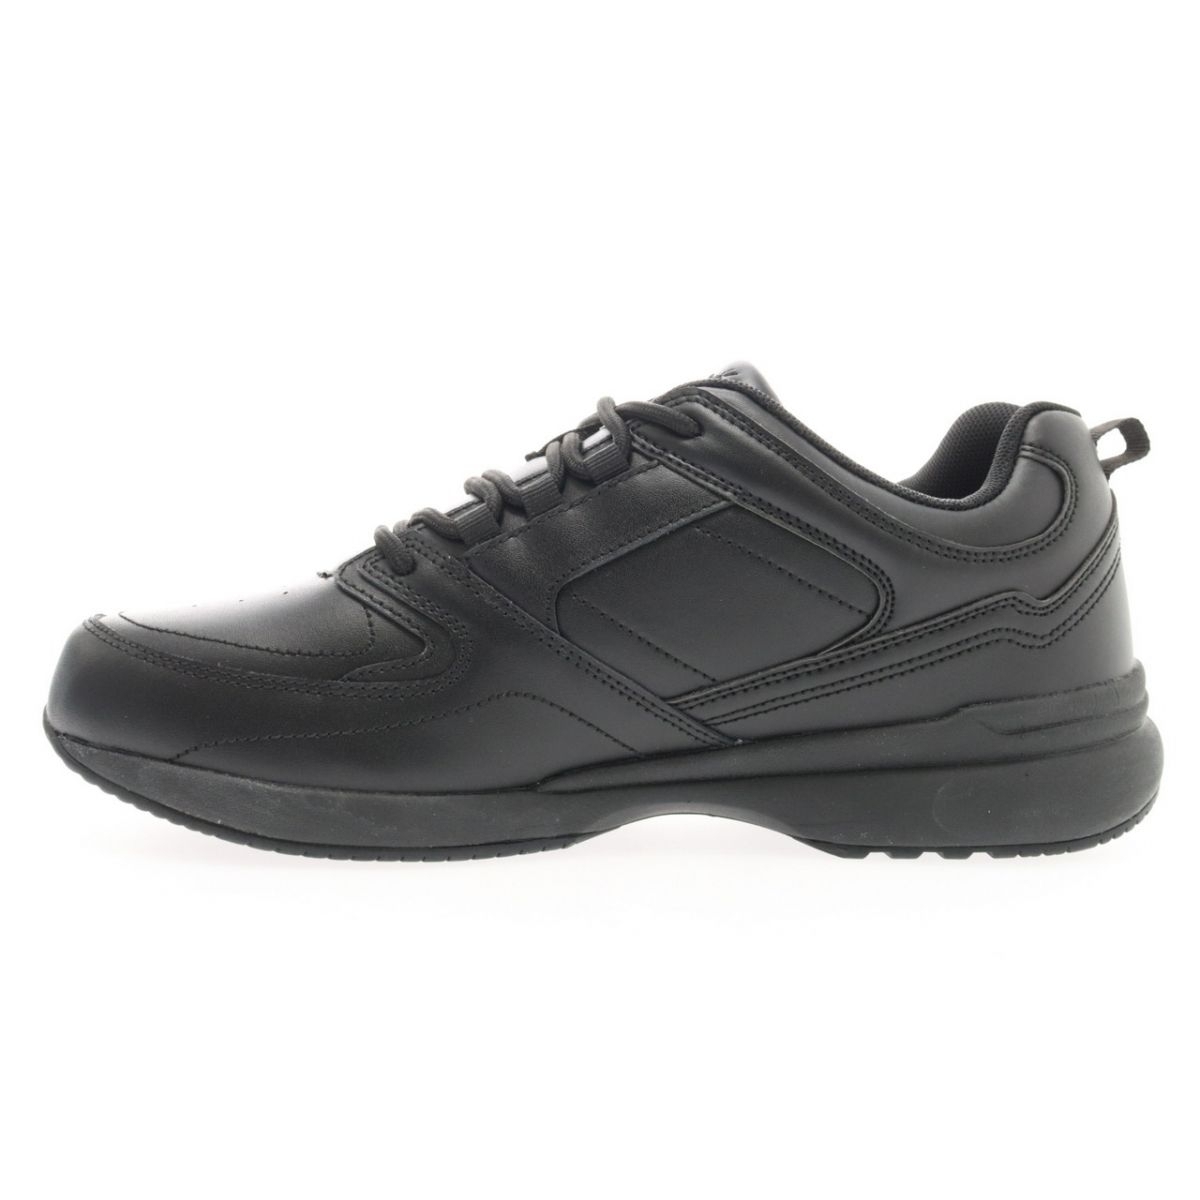 Propet Men's Life Walker Sport Sneaker Black - MAA272LBLK BLACK - BLACK, 9.5